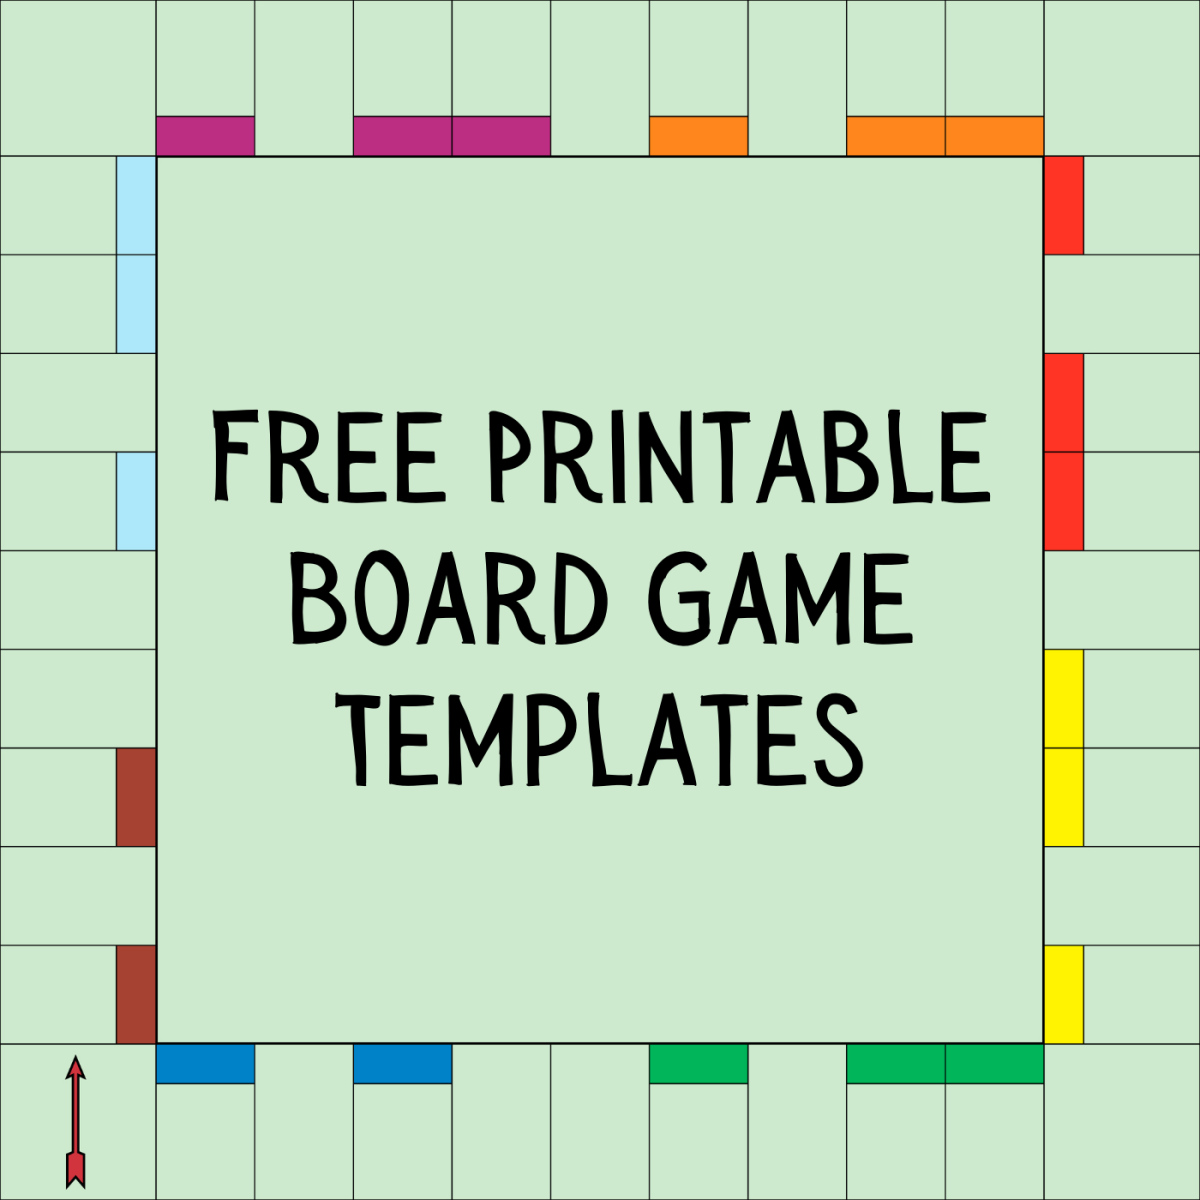 14 Free Printable Board Game Templates HobbyLark